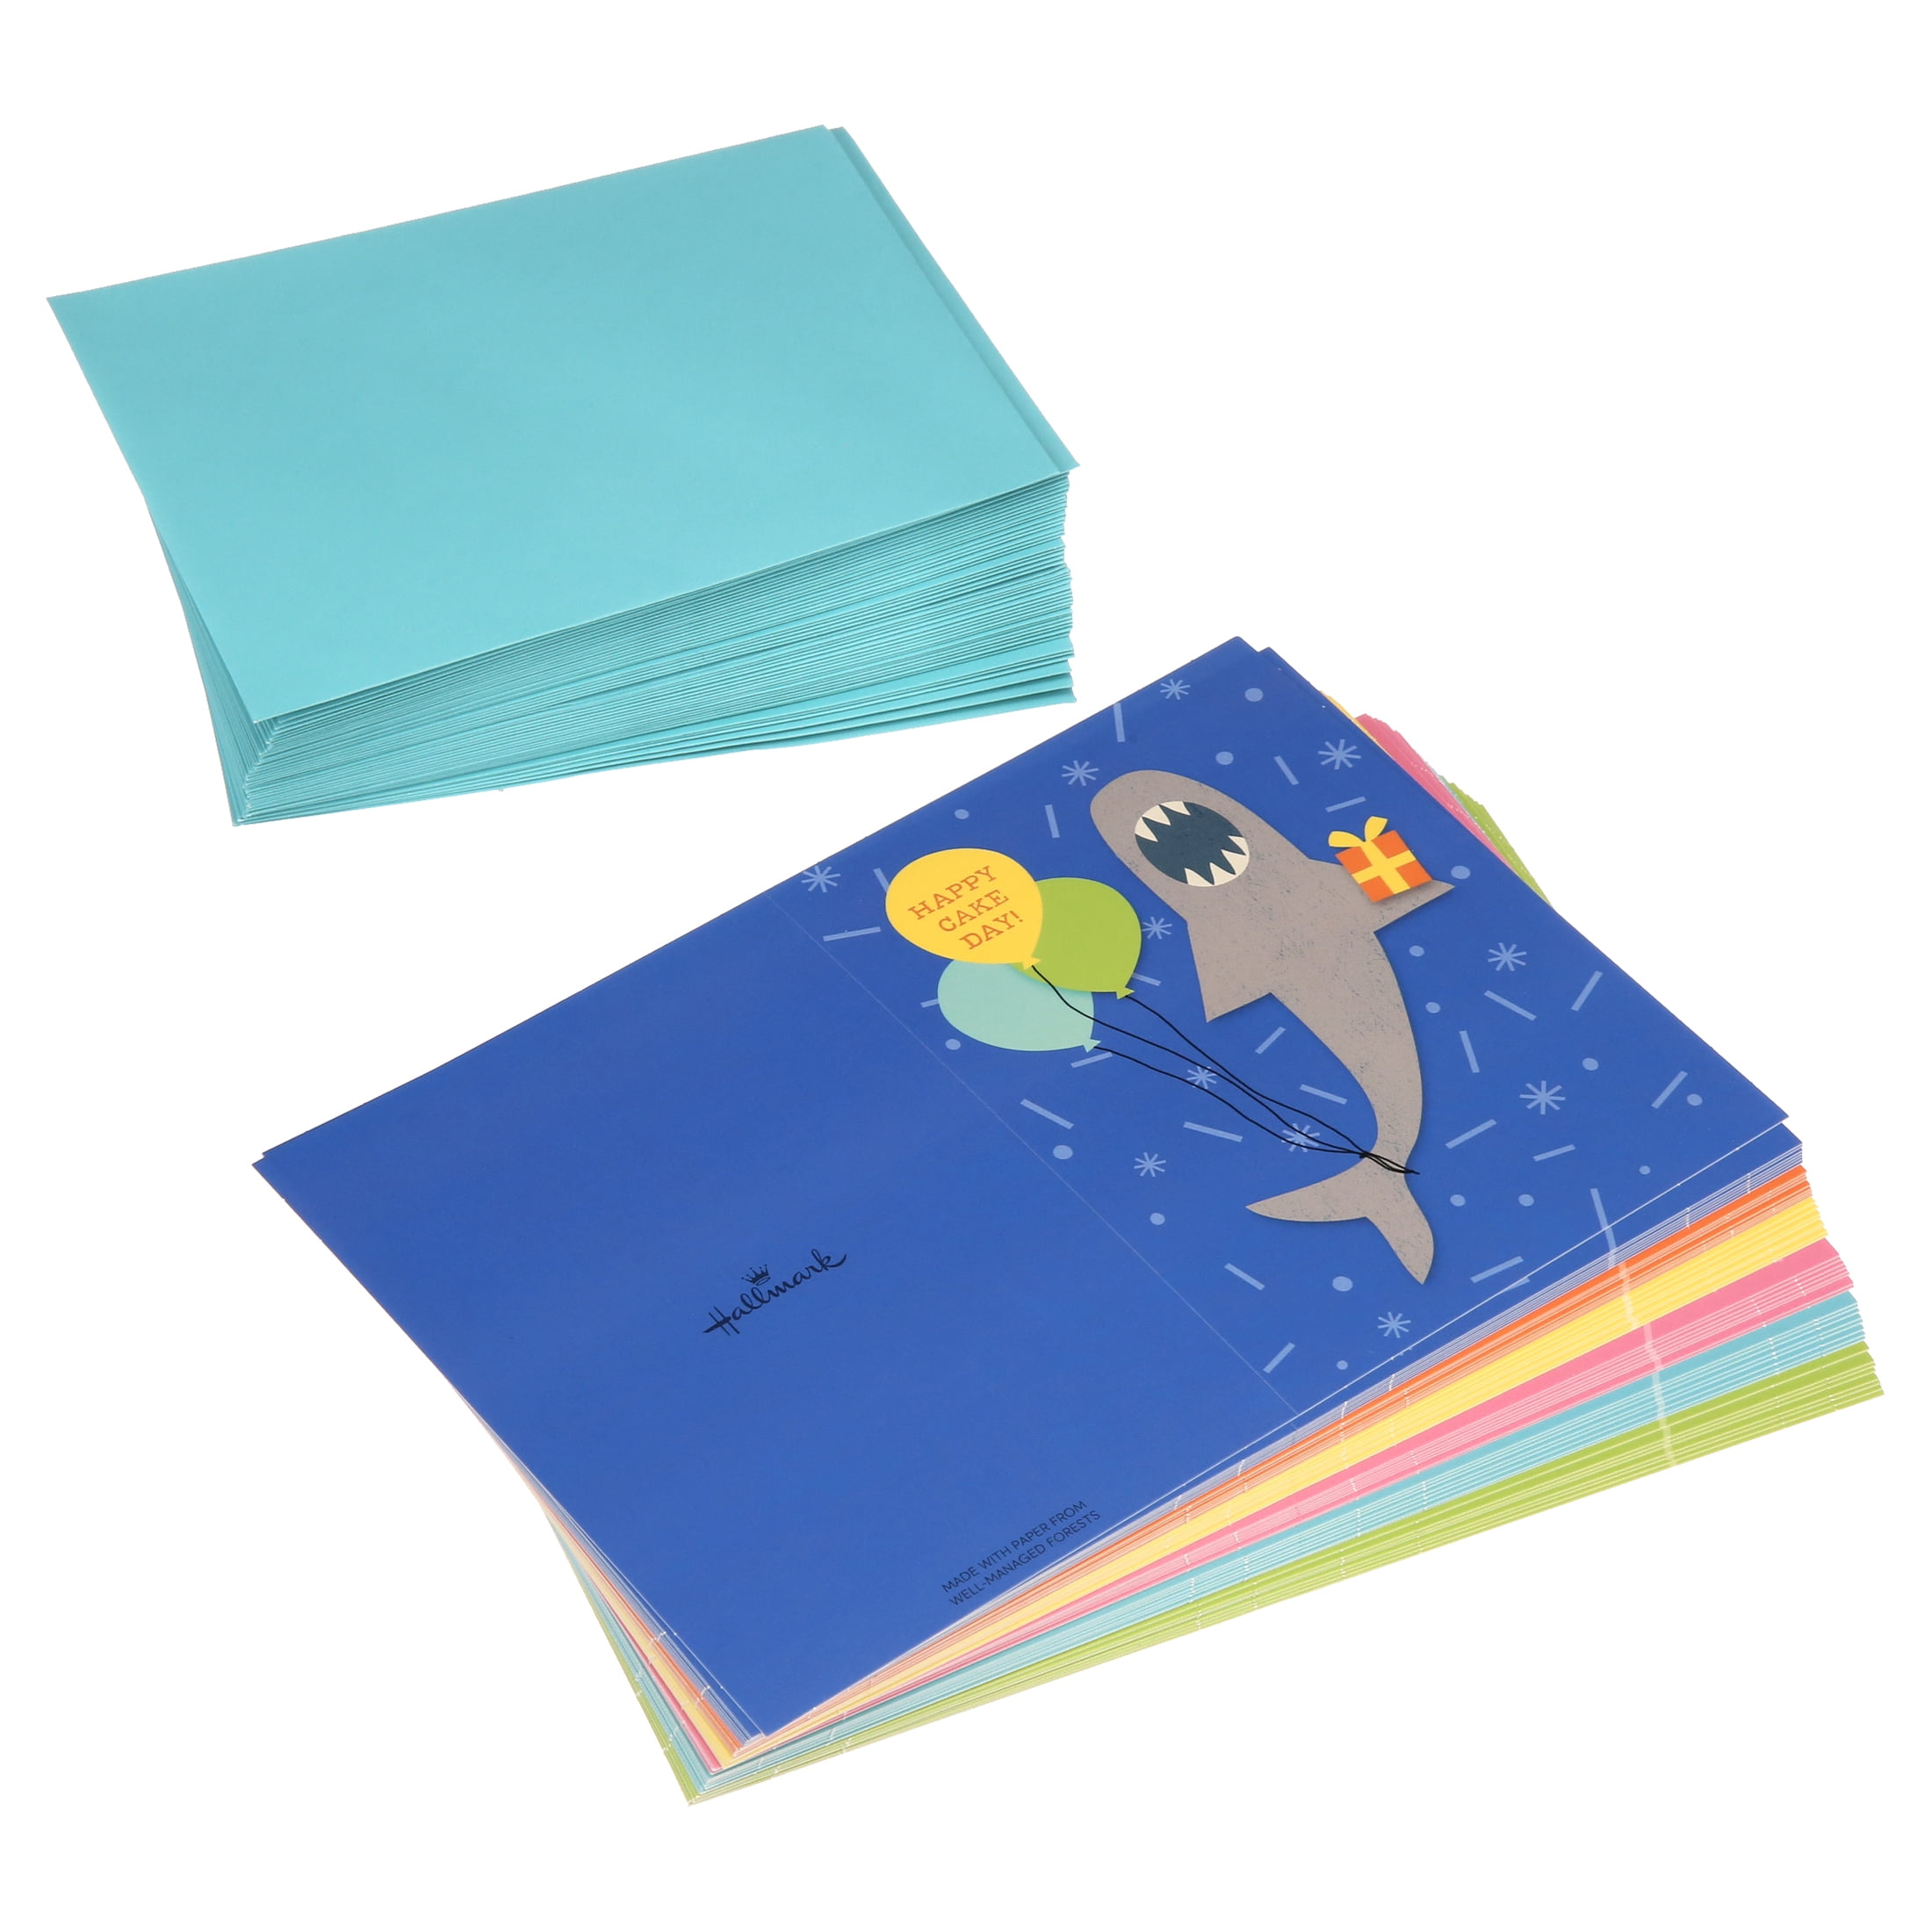 48 Cards with Envelopes Hallmark Birthday Cards for Kids Assortment Dinosaurs, Sloths, Unicorns, Flamingos, Turtles, Sharks 